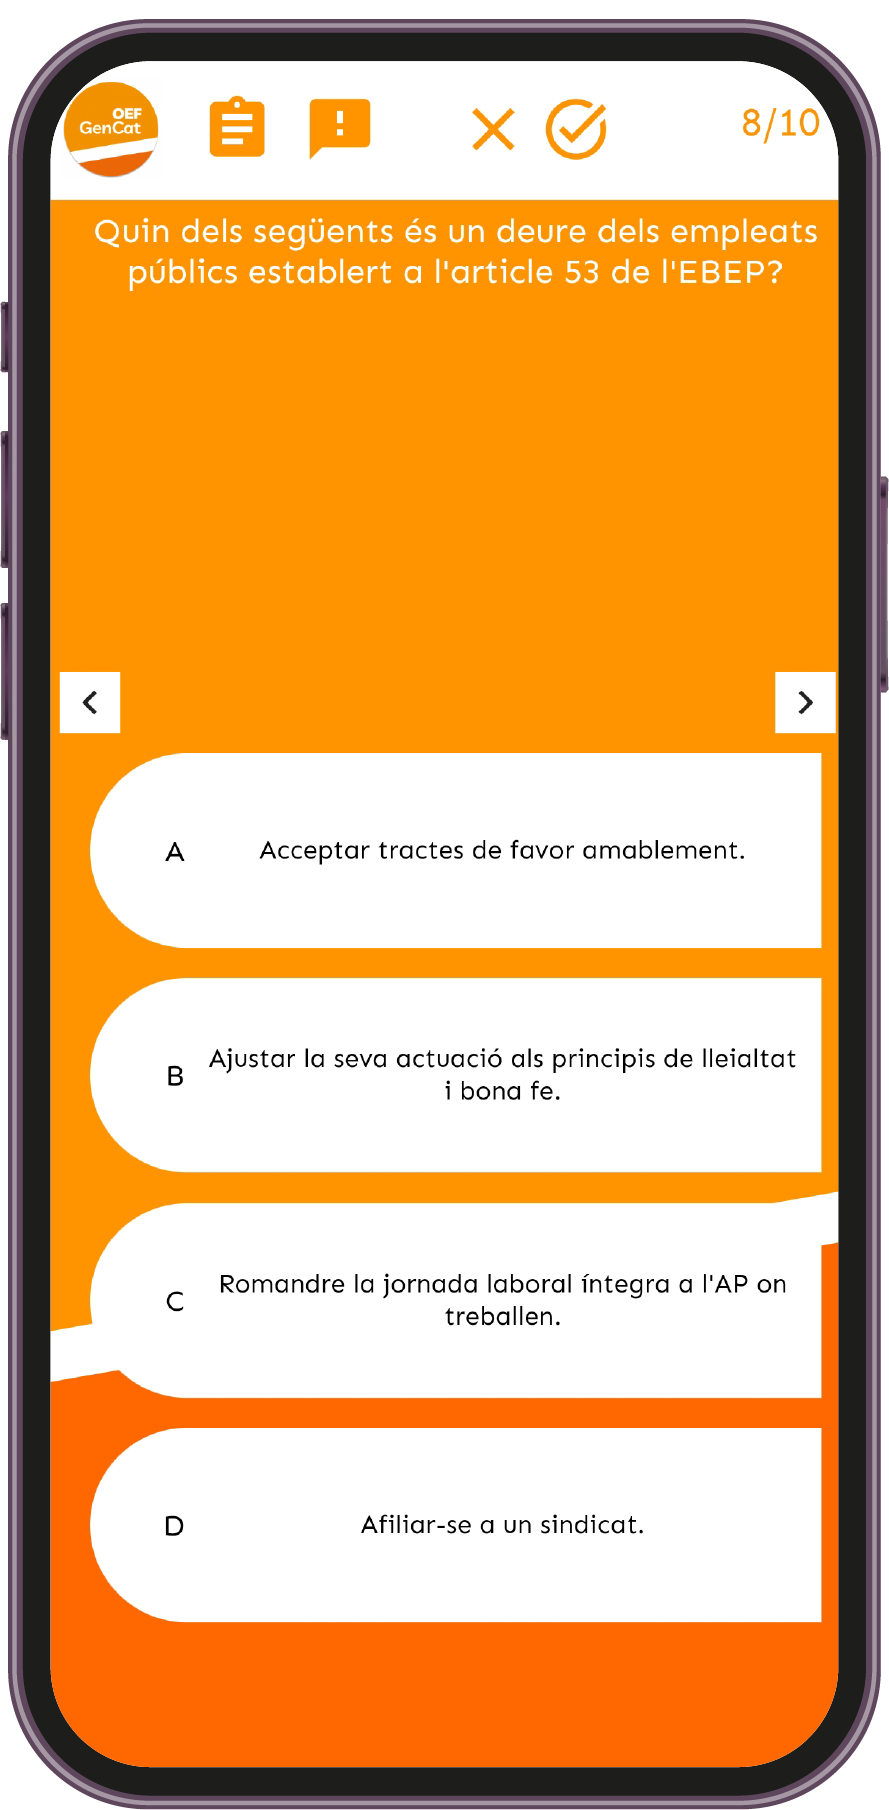 oposicions_gencat_app_mobil_pregunta_test.webp